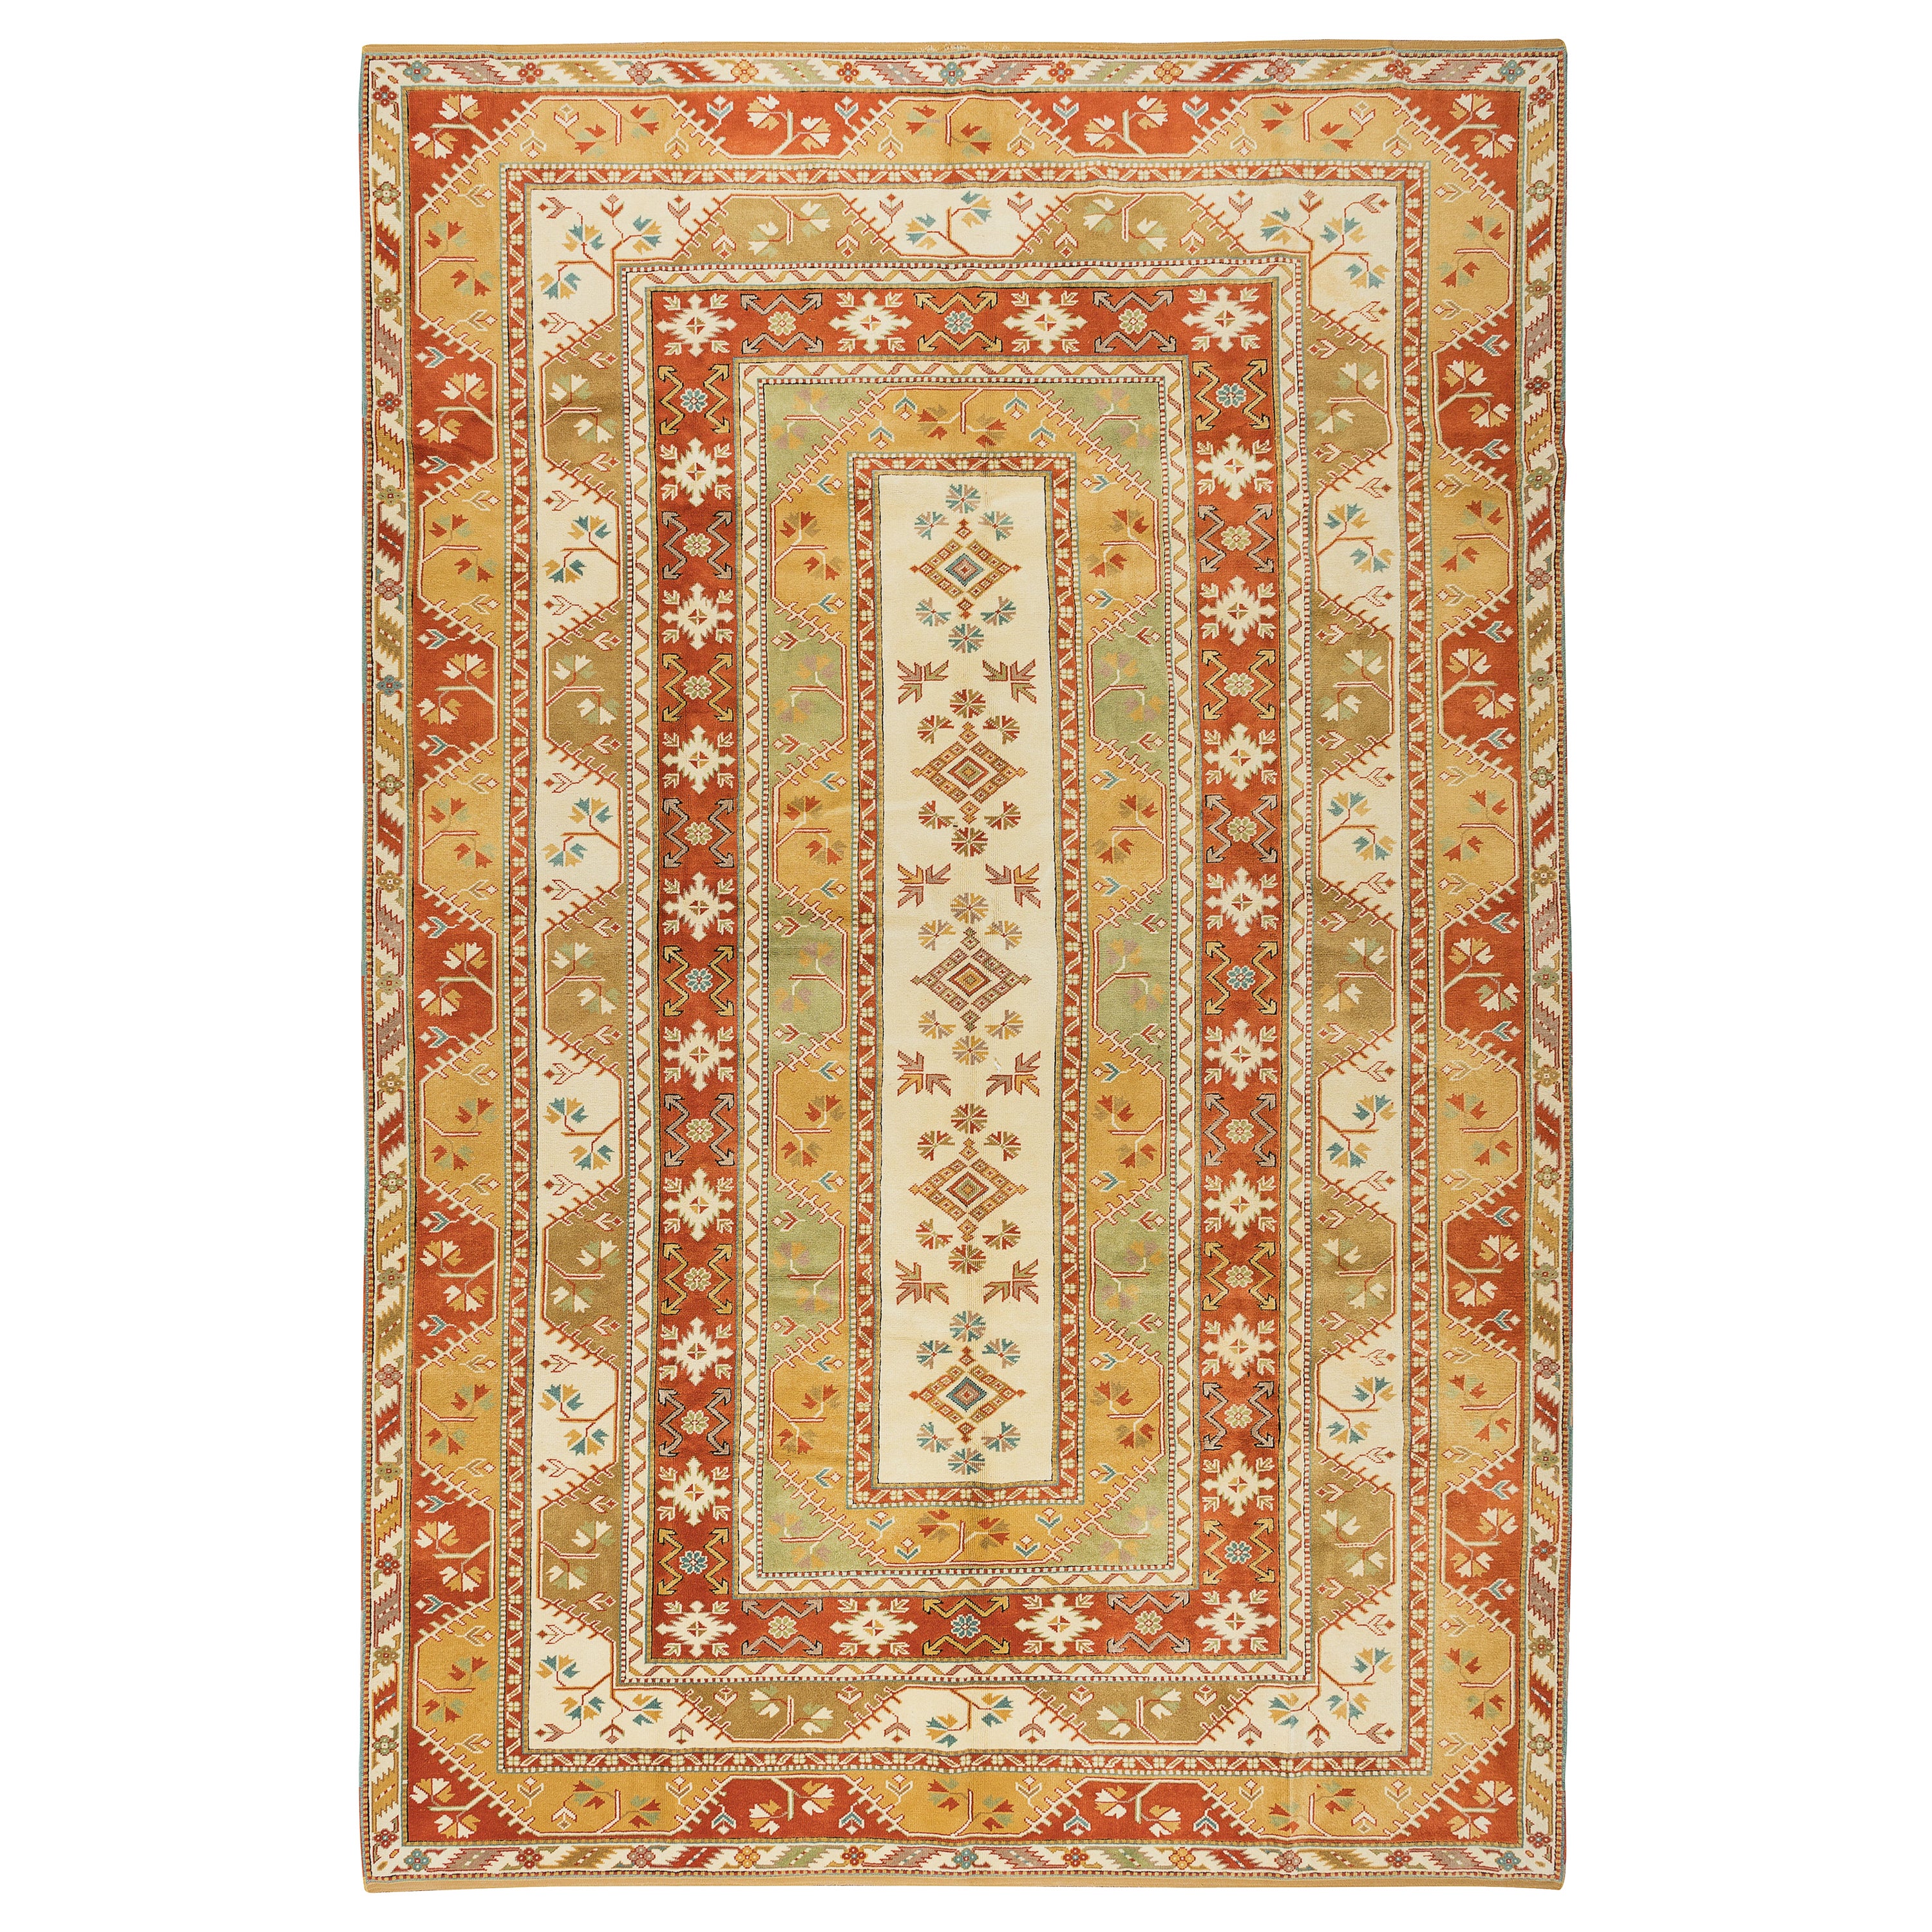 8x11.8 Ft One-of-a-Kind Vintage Area Rug, Handmade Turkish Carpet,  100% Wool